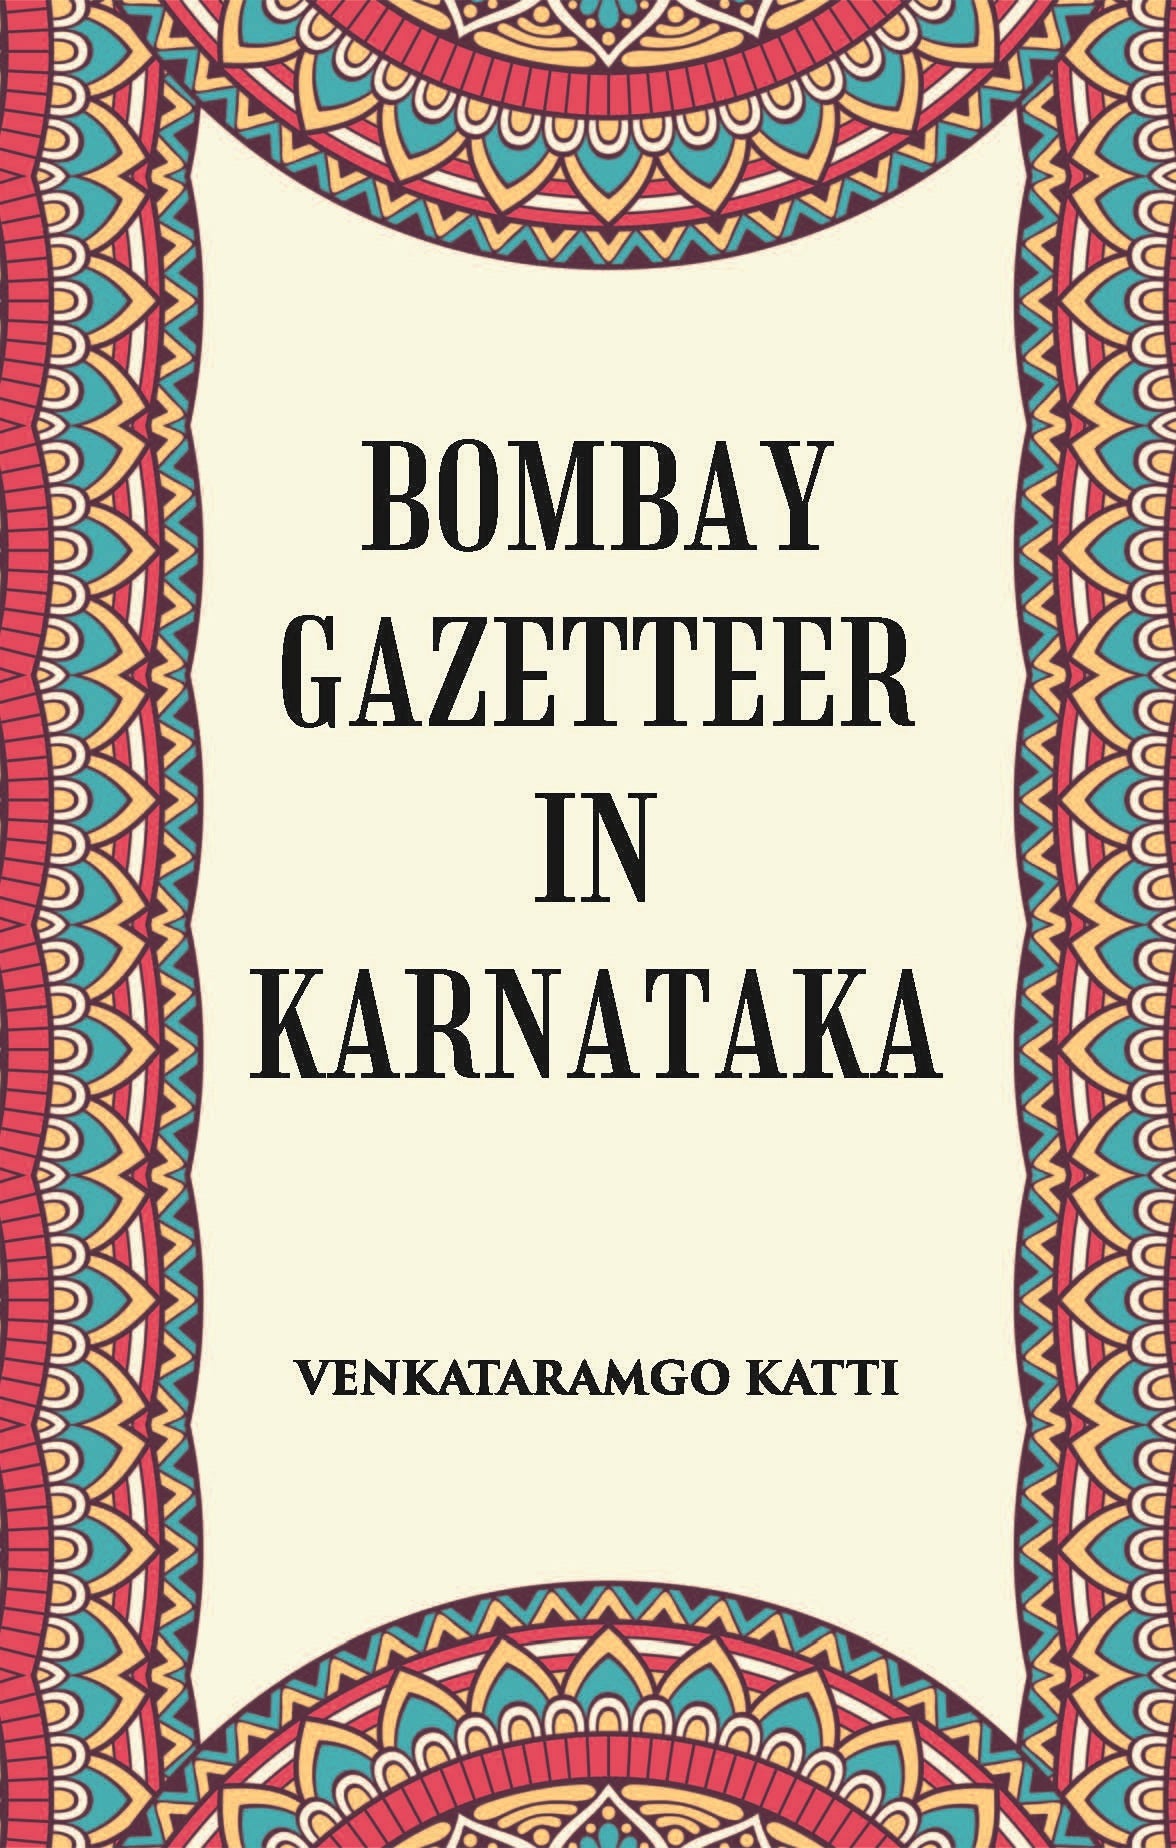 Bombay Gazetteer In Karnataka